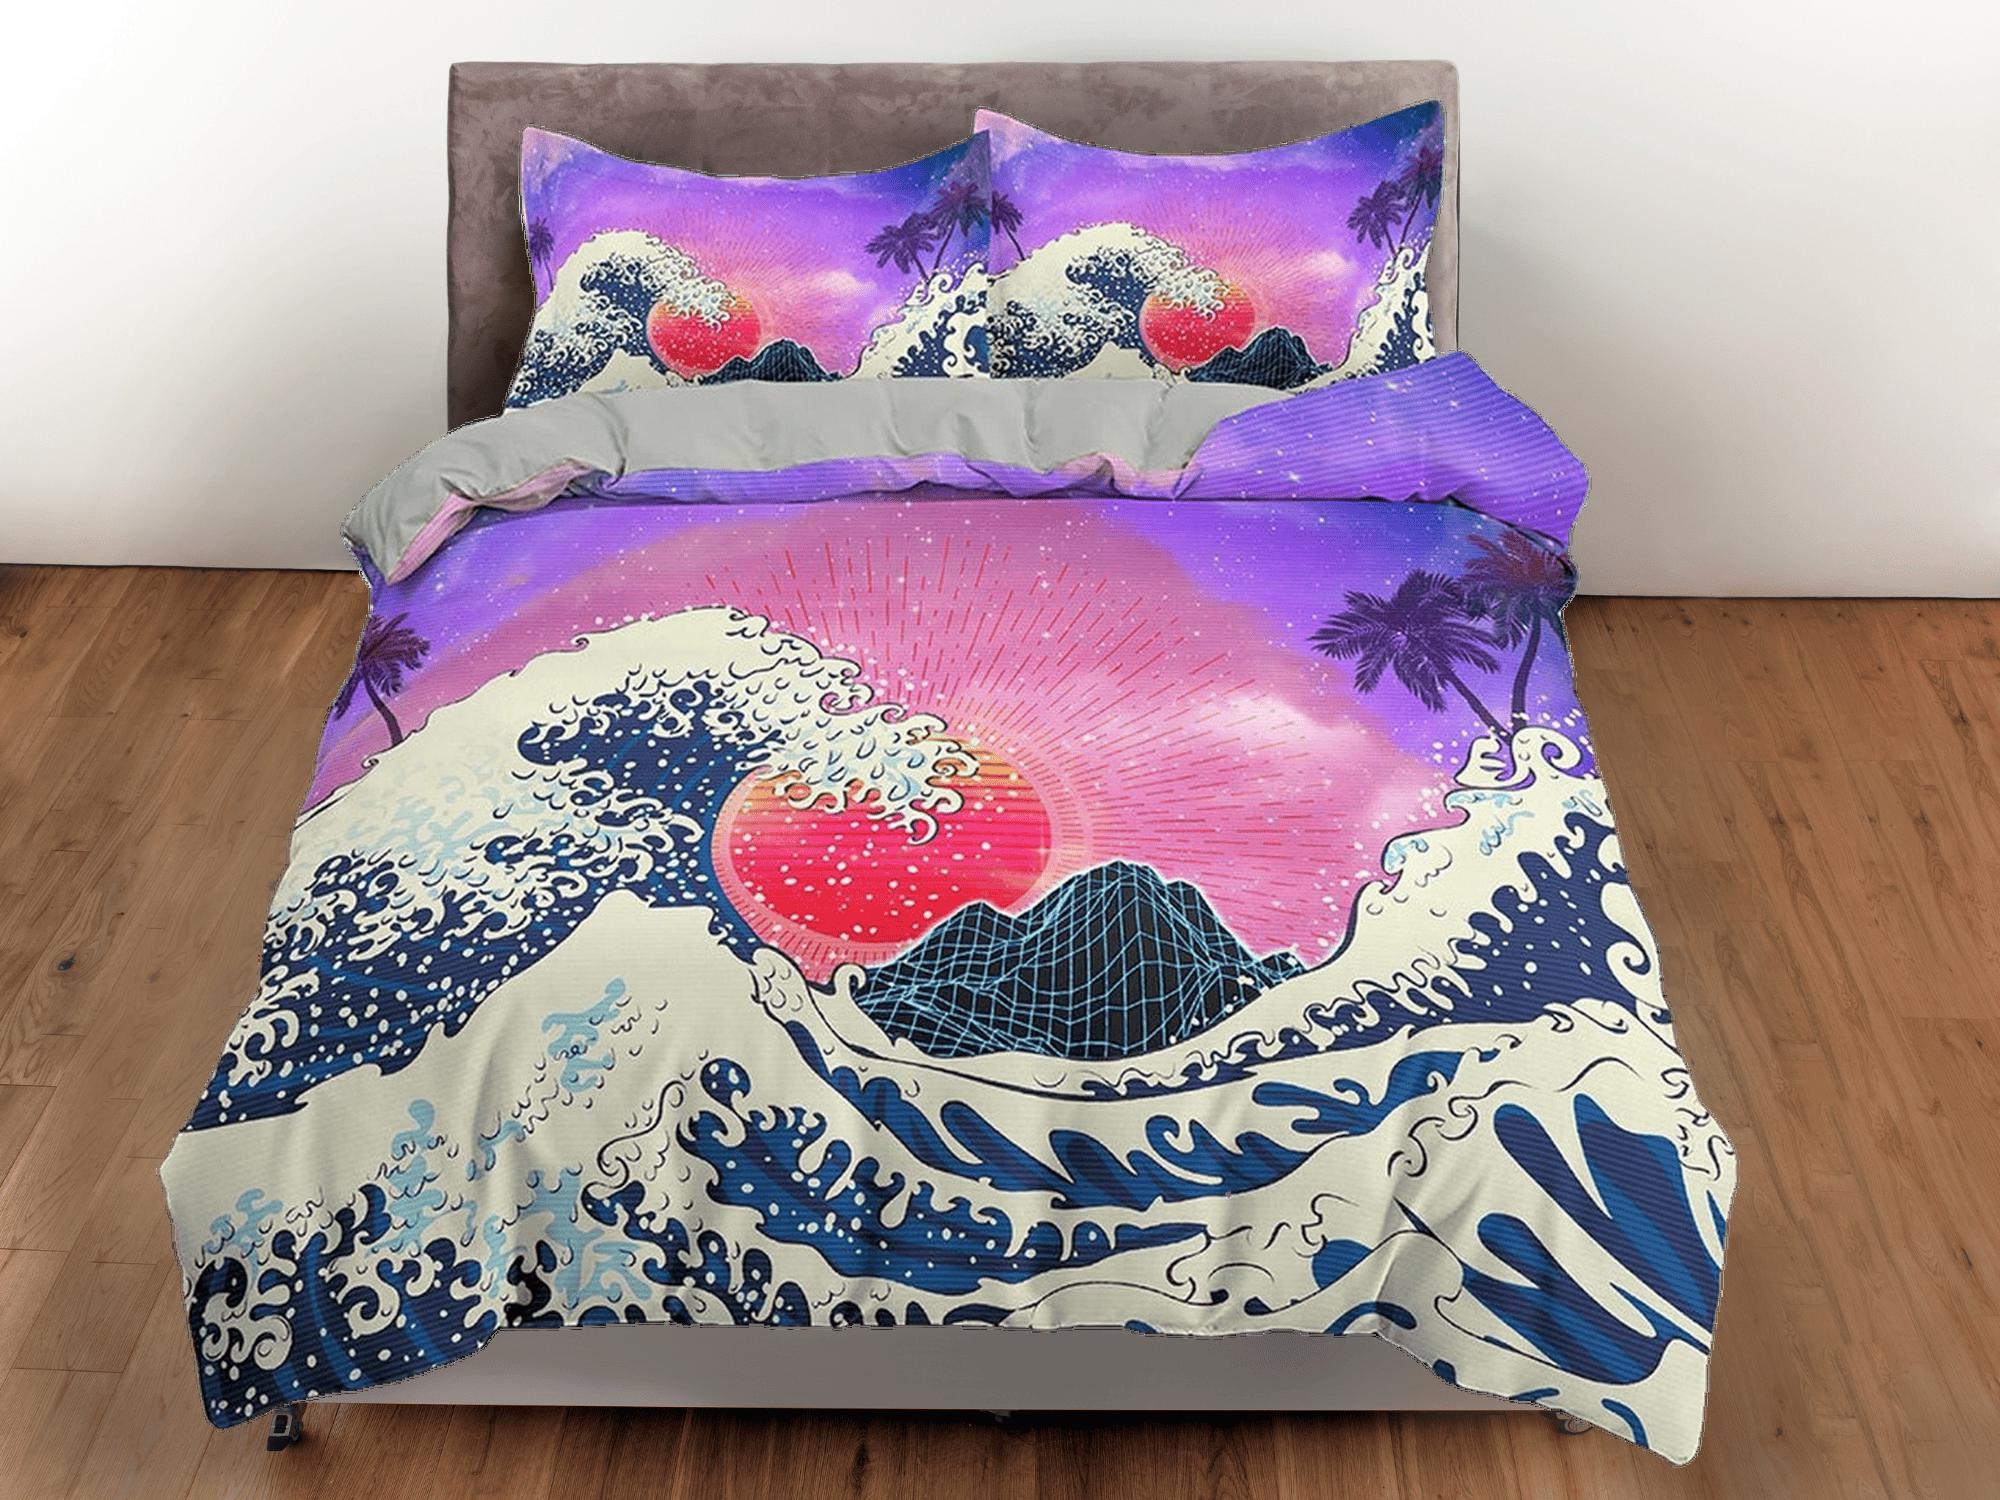 daintyduvet The Great Wave of Kanagawa Bedding, Vaporwave Hippie Bedding, Japanese Duvet Cover Set, Aesthetic Purple Duvet Cover King Queen Full Twin